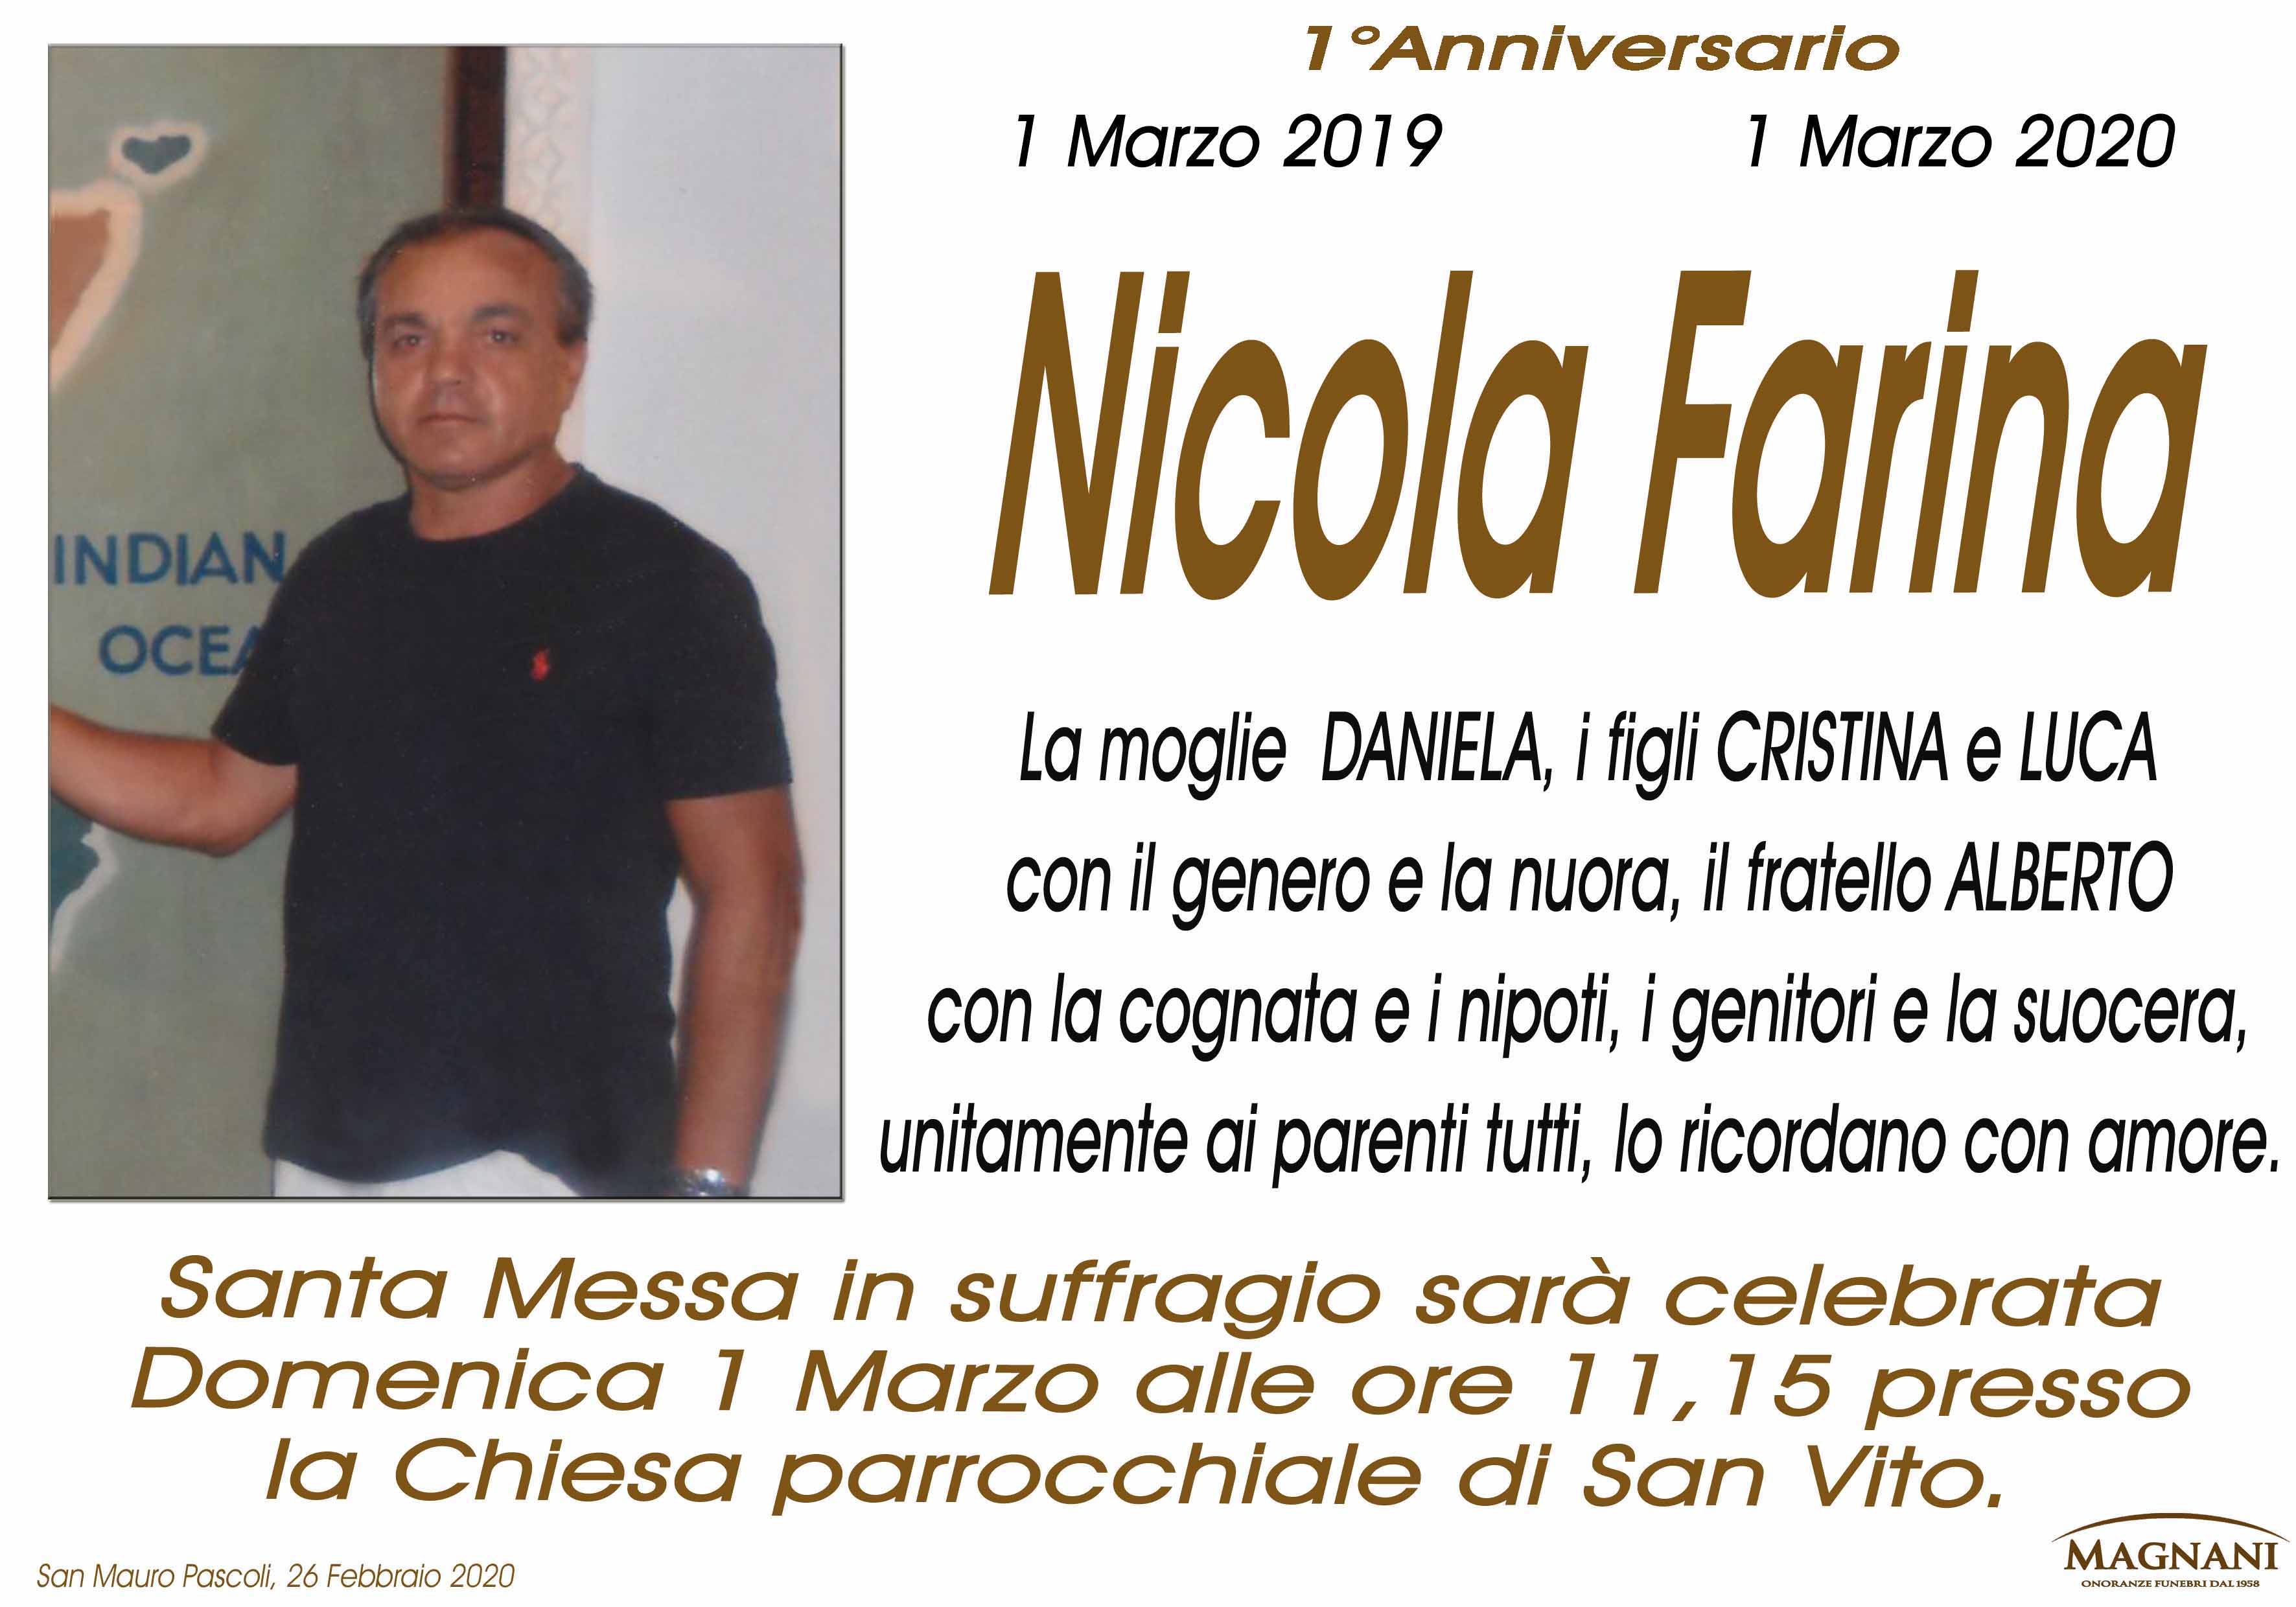 Nicola Farina